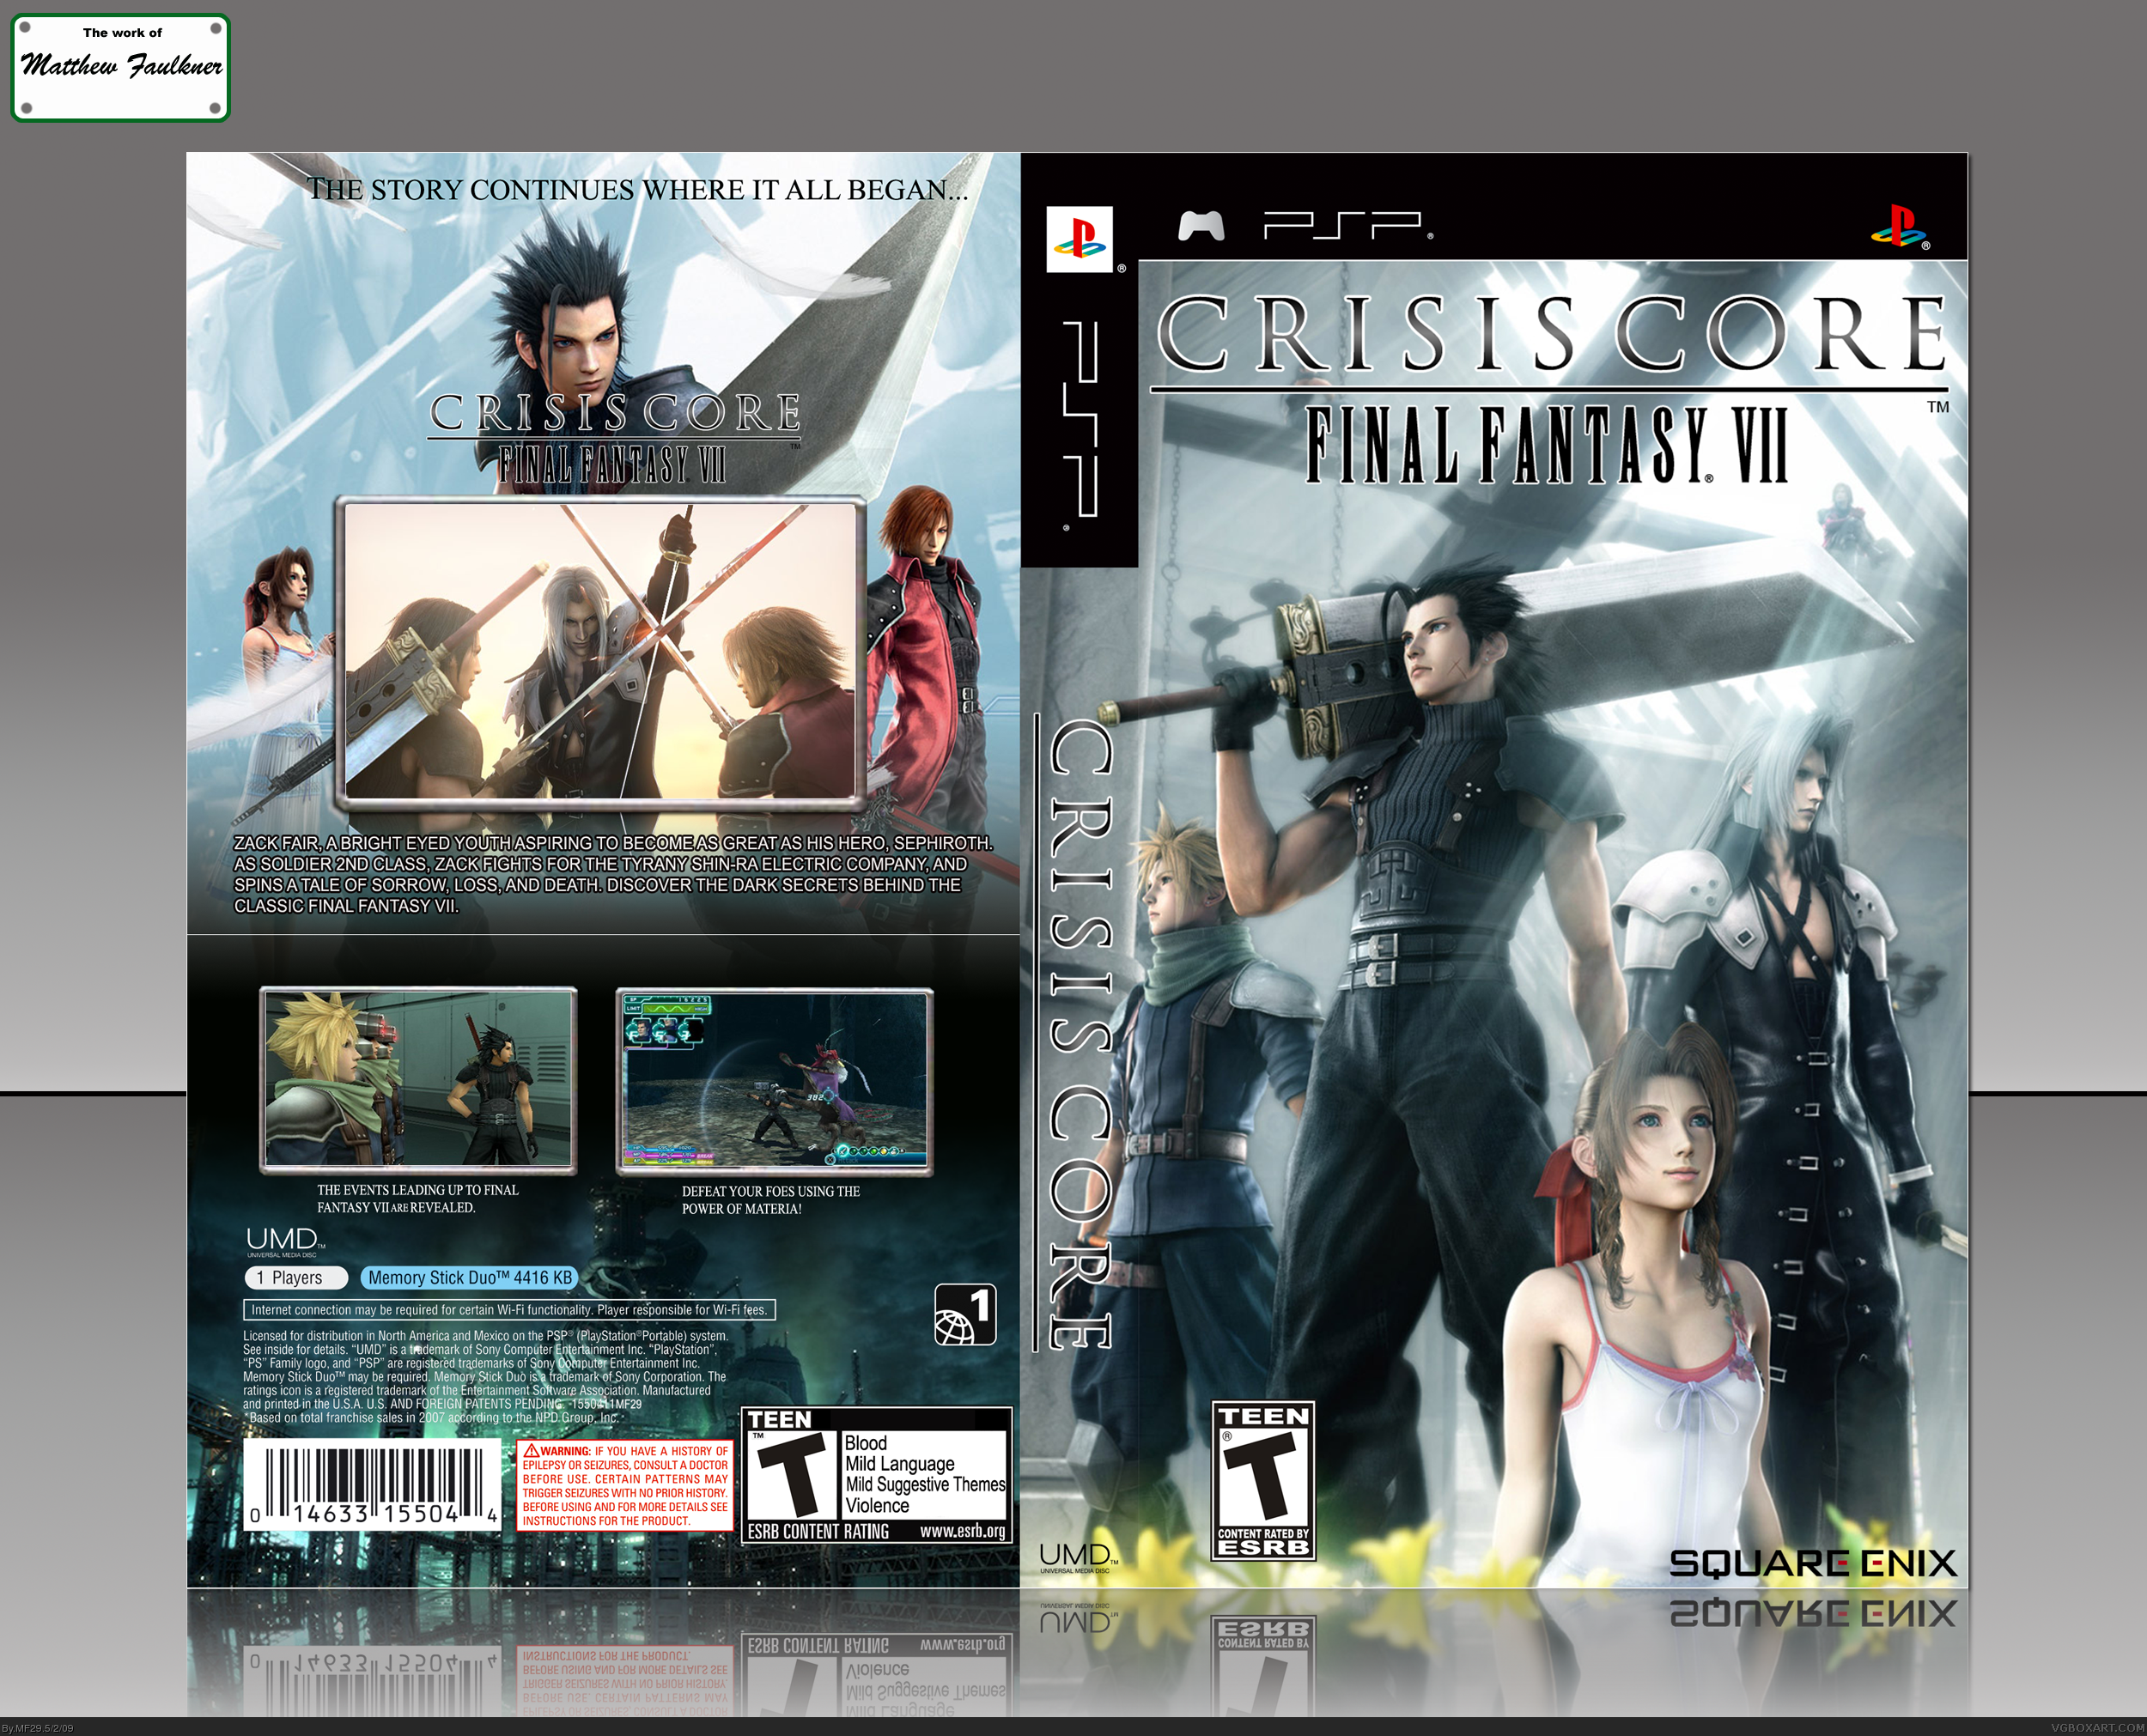 Viewing full size Crisis Core: Final Fantasy VII box cover